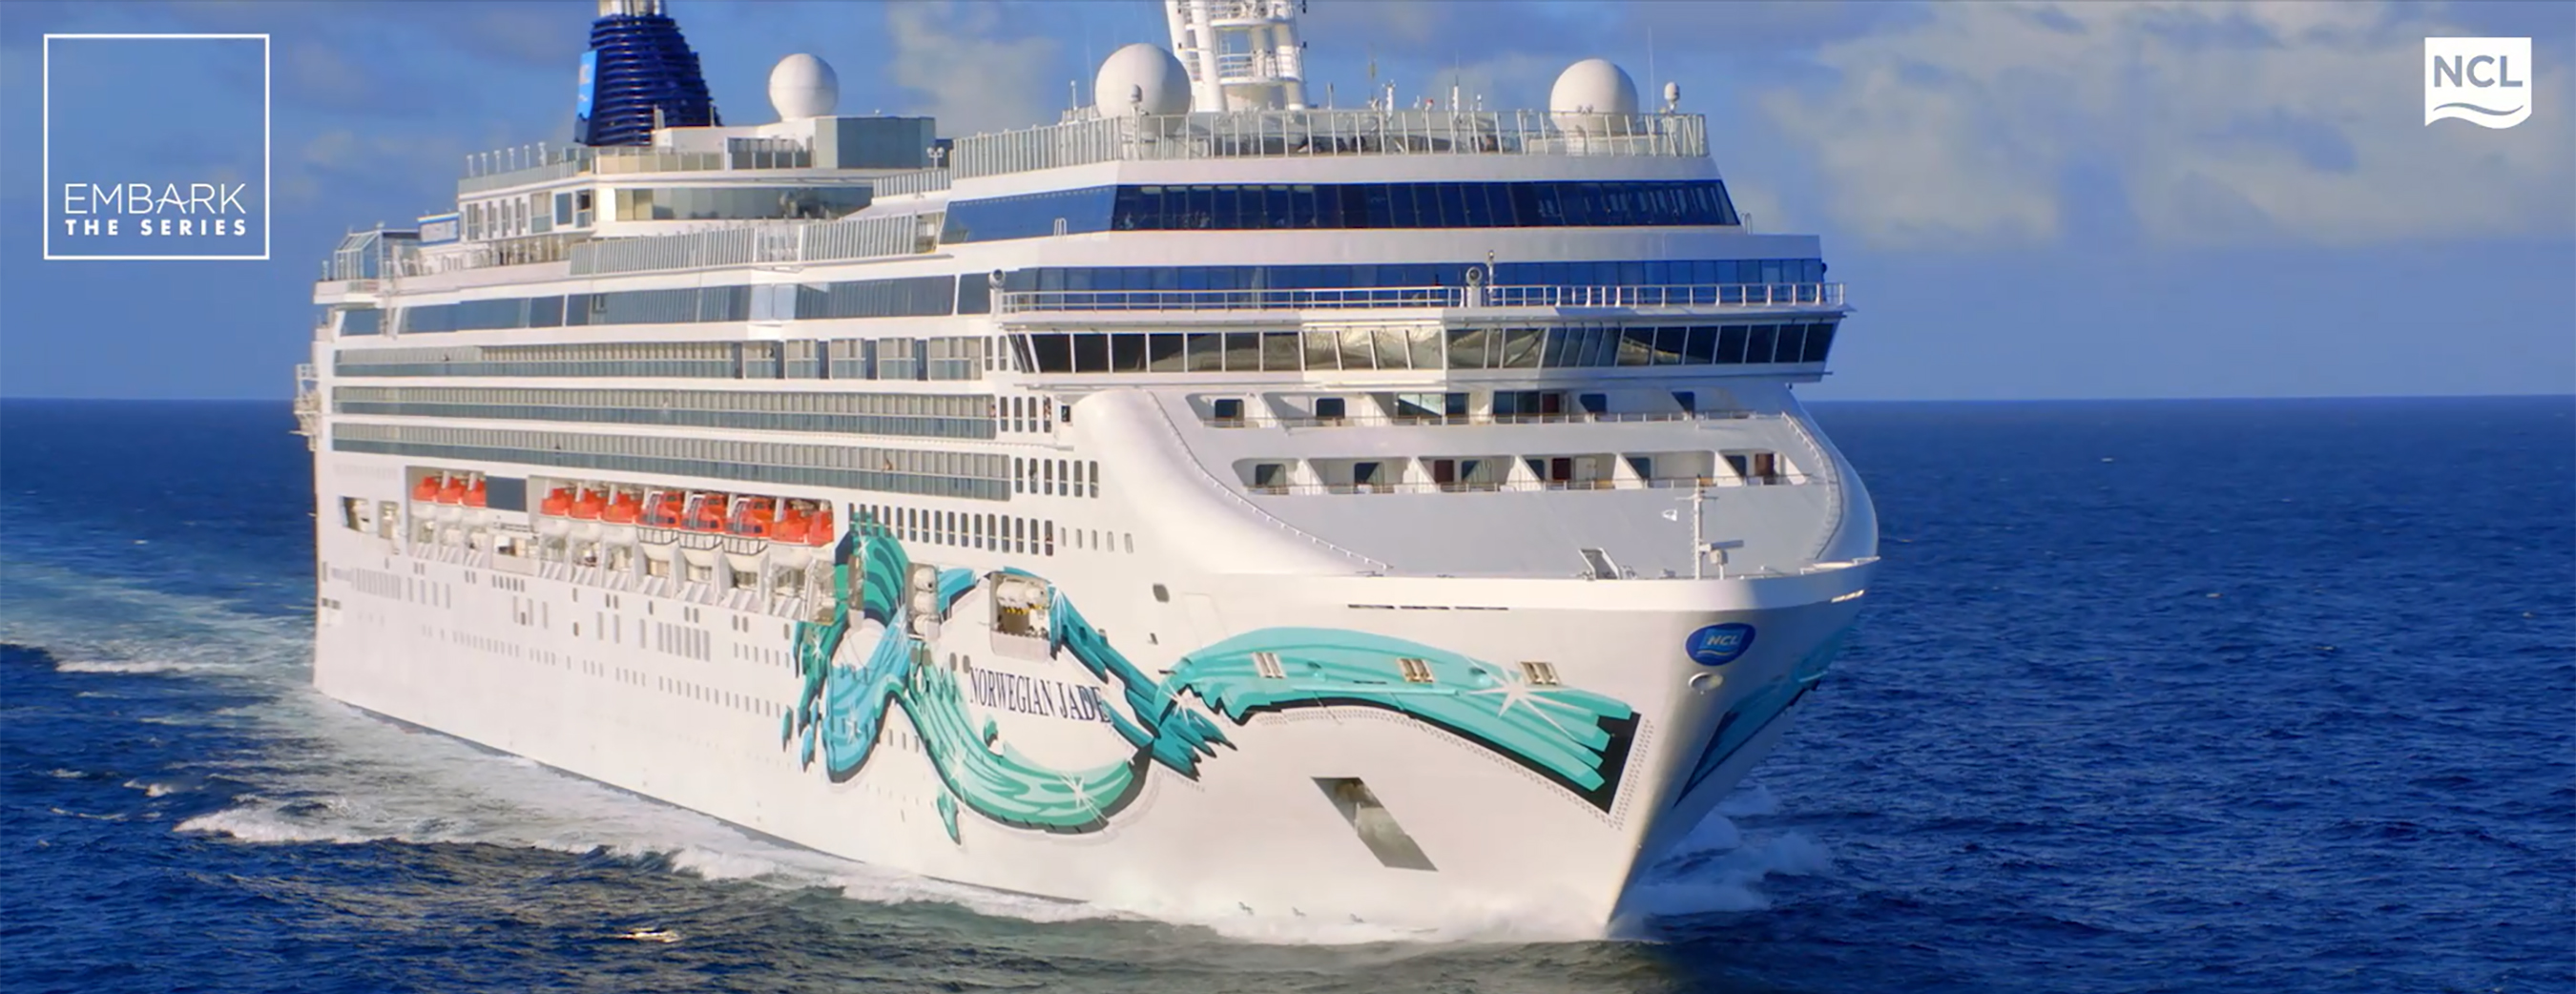 Norwegian Cruise Line Premieres New Episode of 'EMBARK - The Series' Tonight